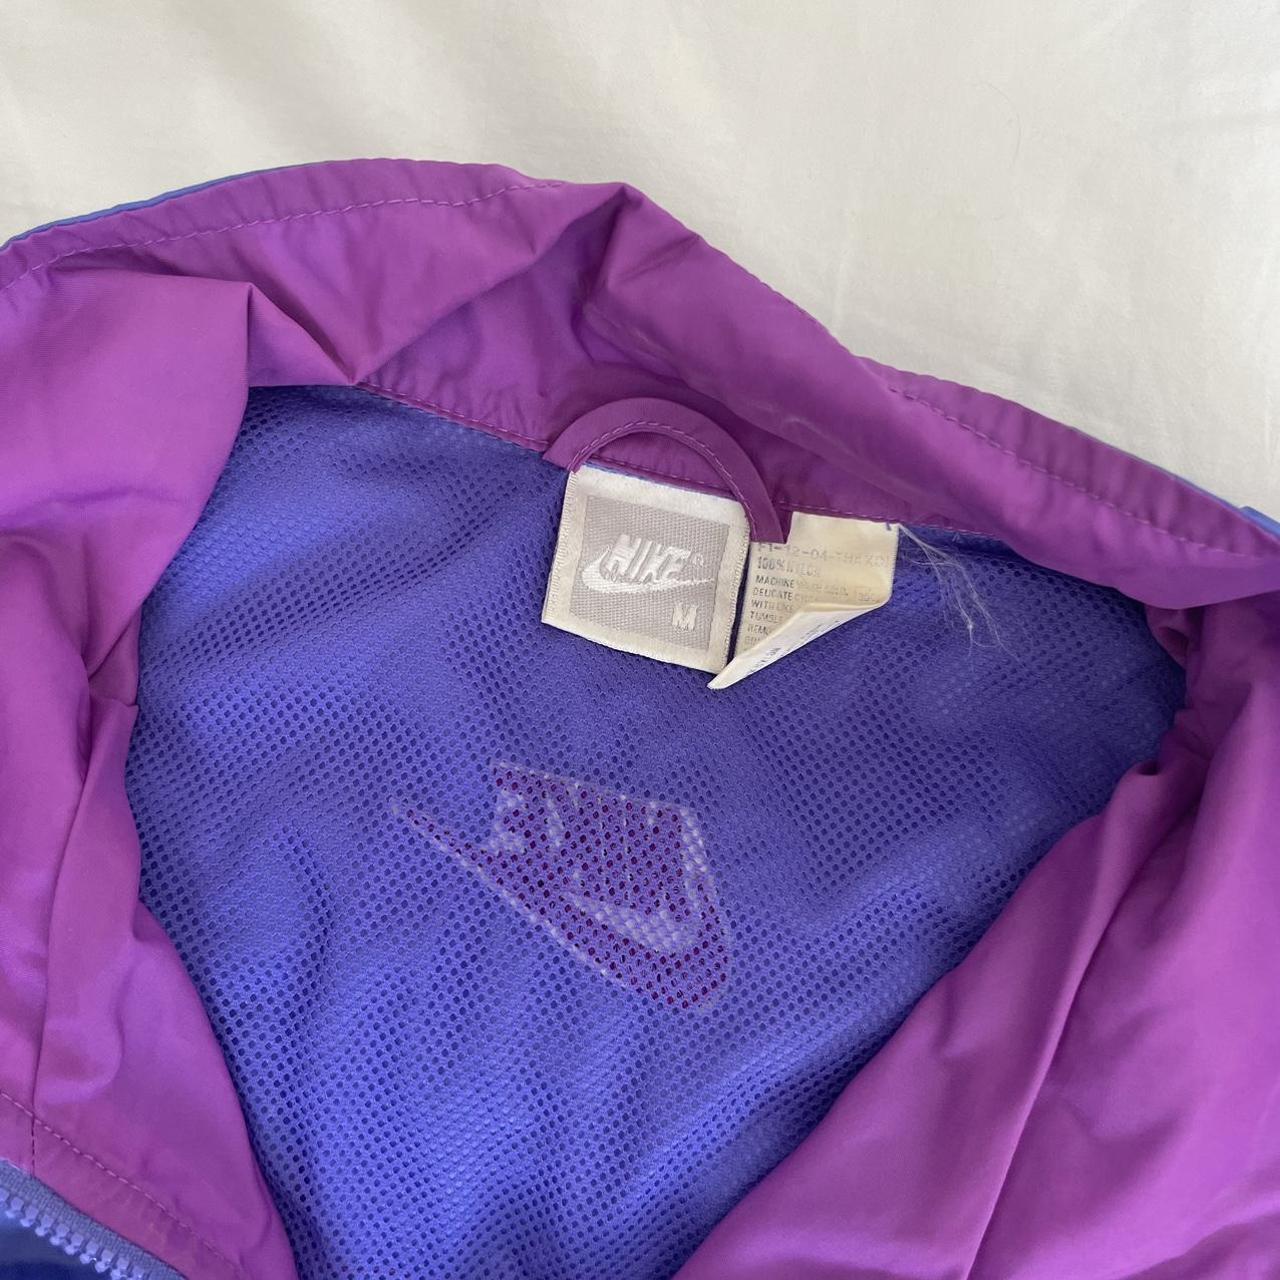 Retro Nike pink and purple windbreaker Bought 2nd... - Depop